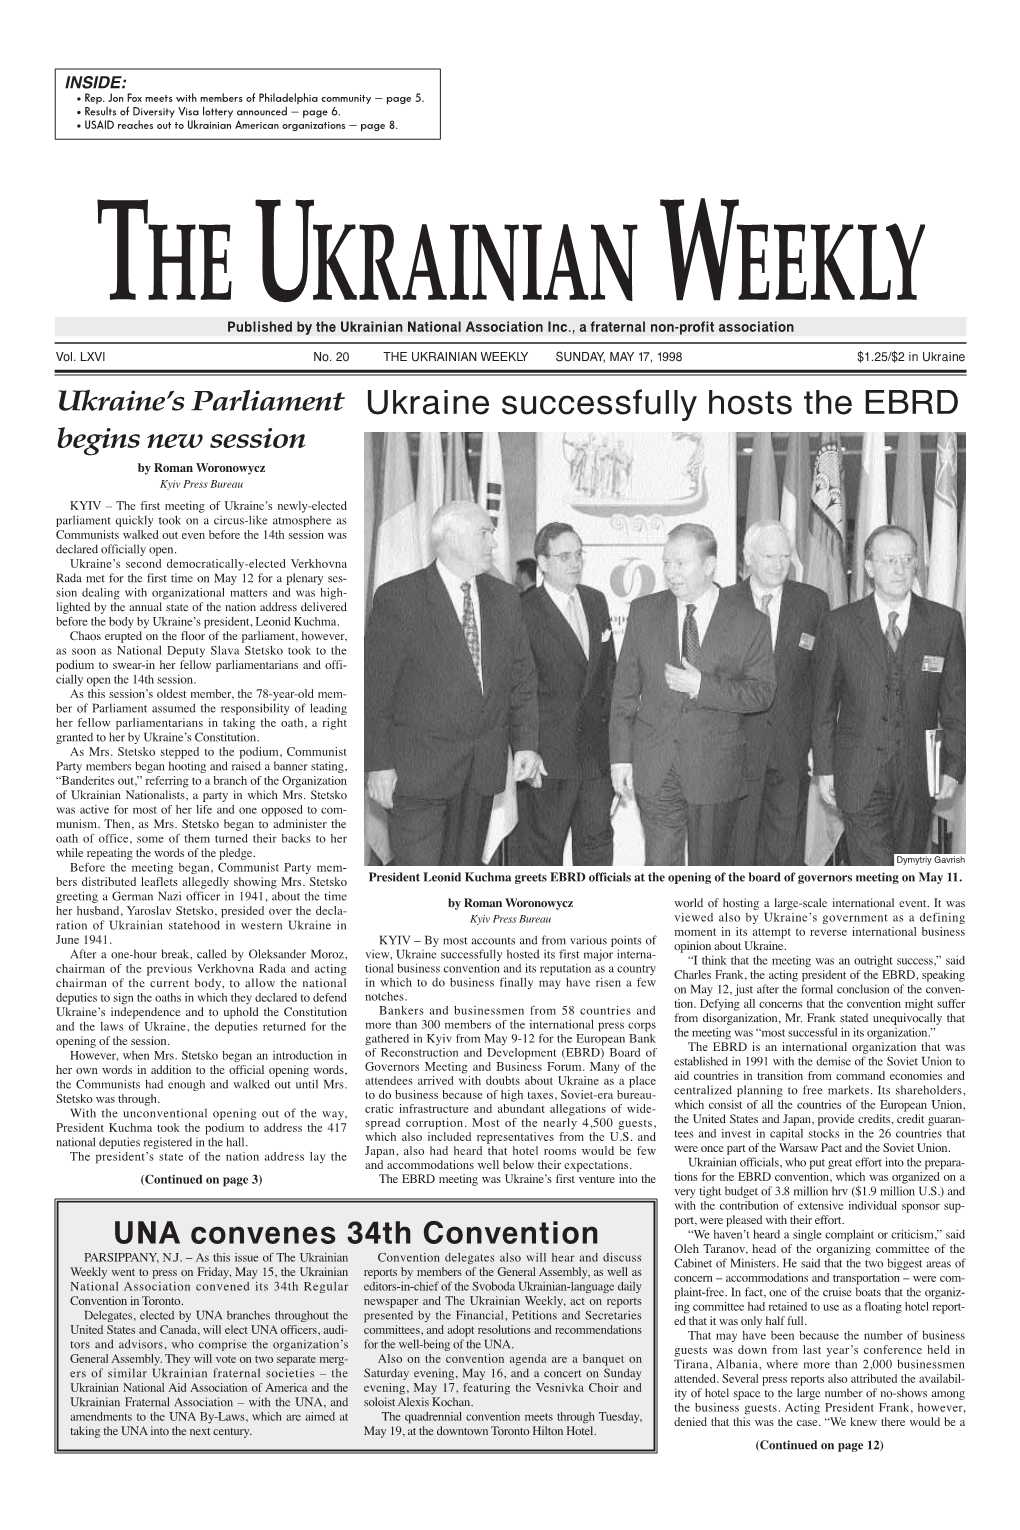 The Ukrainian Weekly 1998, No.20